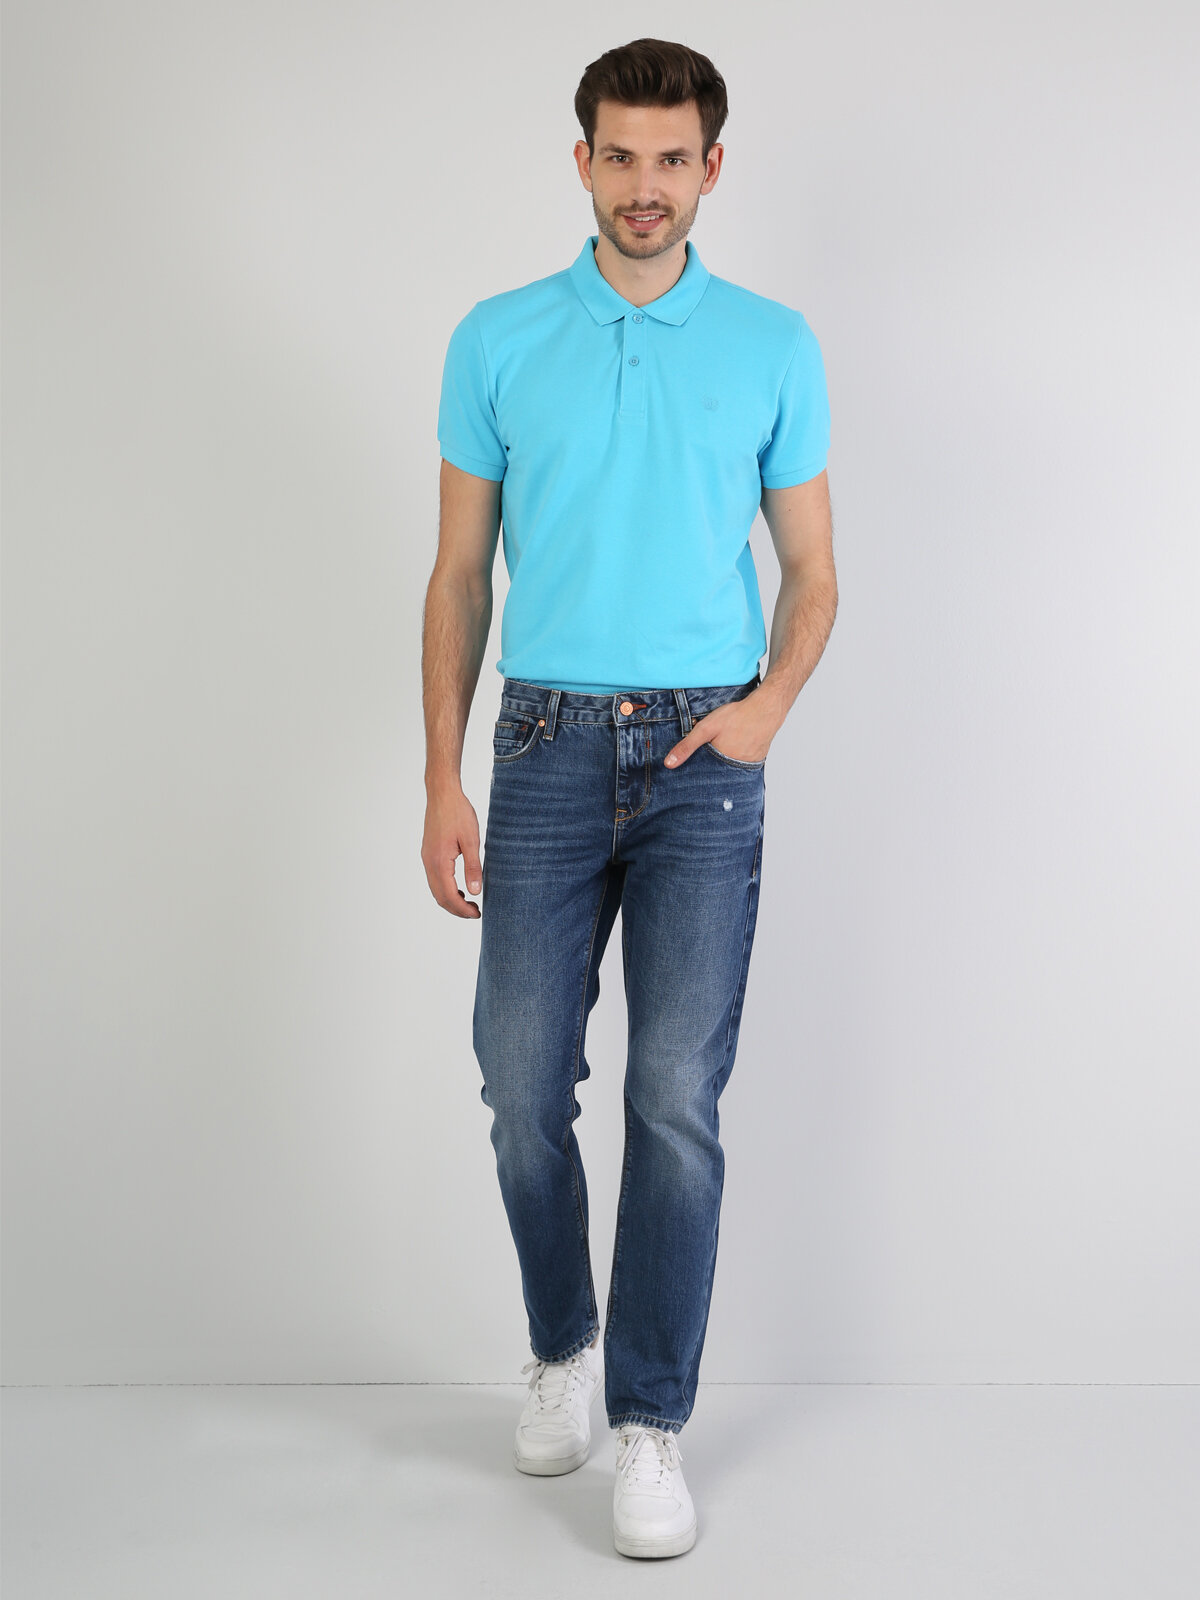 Colins Blue Men Short Sleeve Polo Shirt. 3